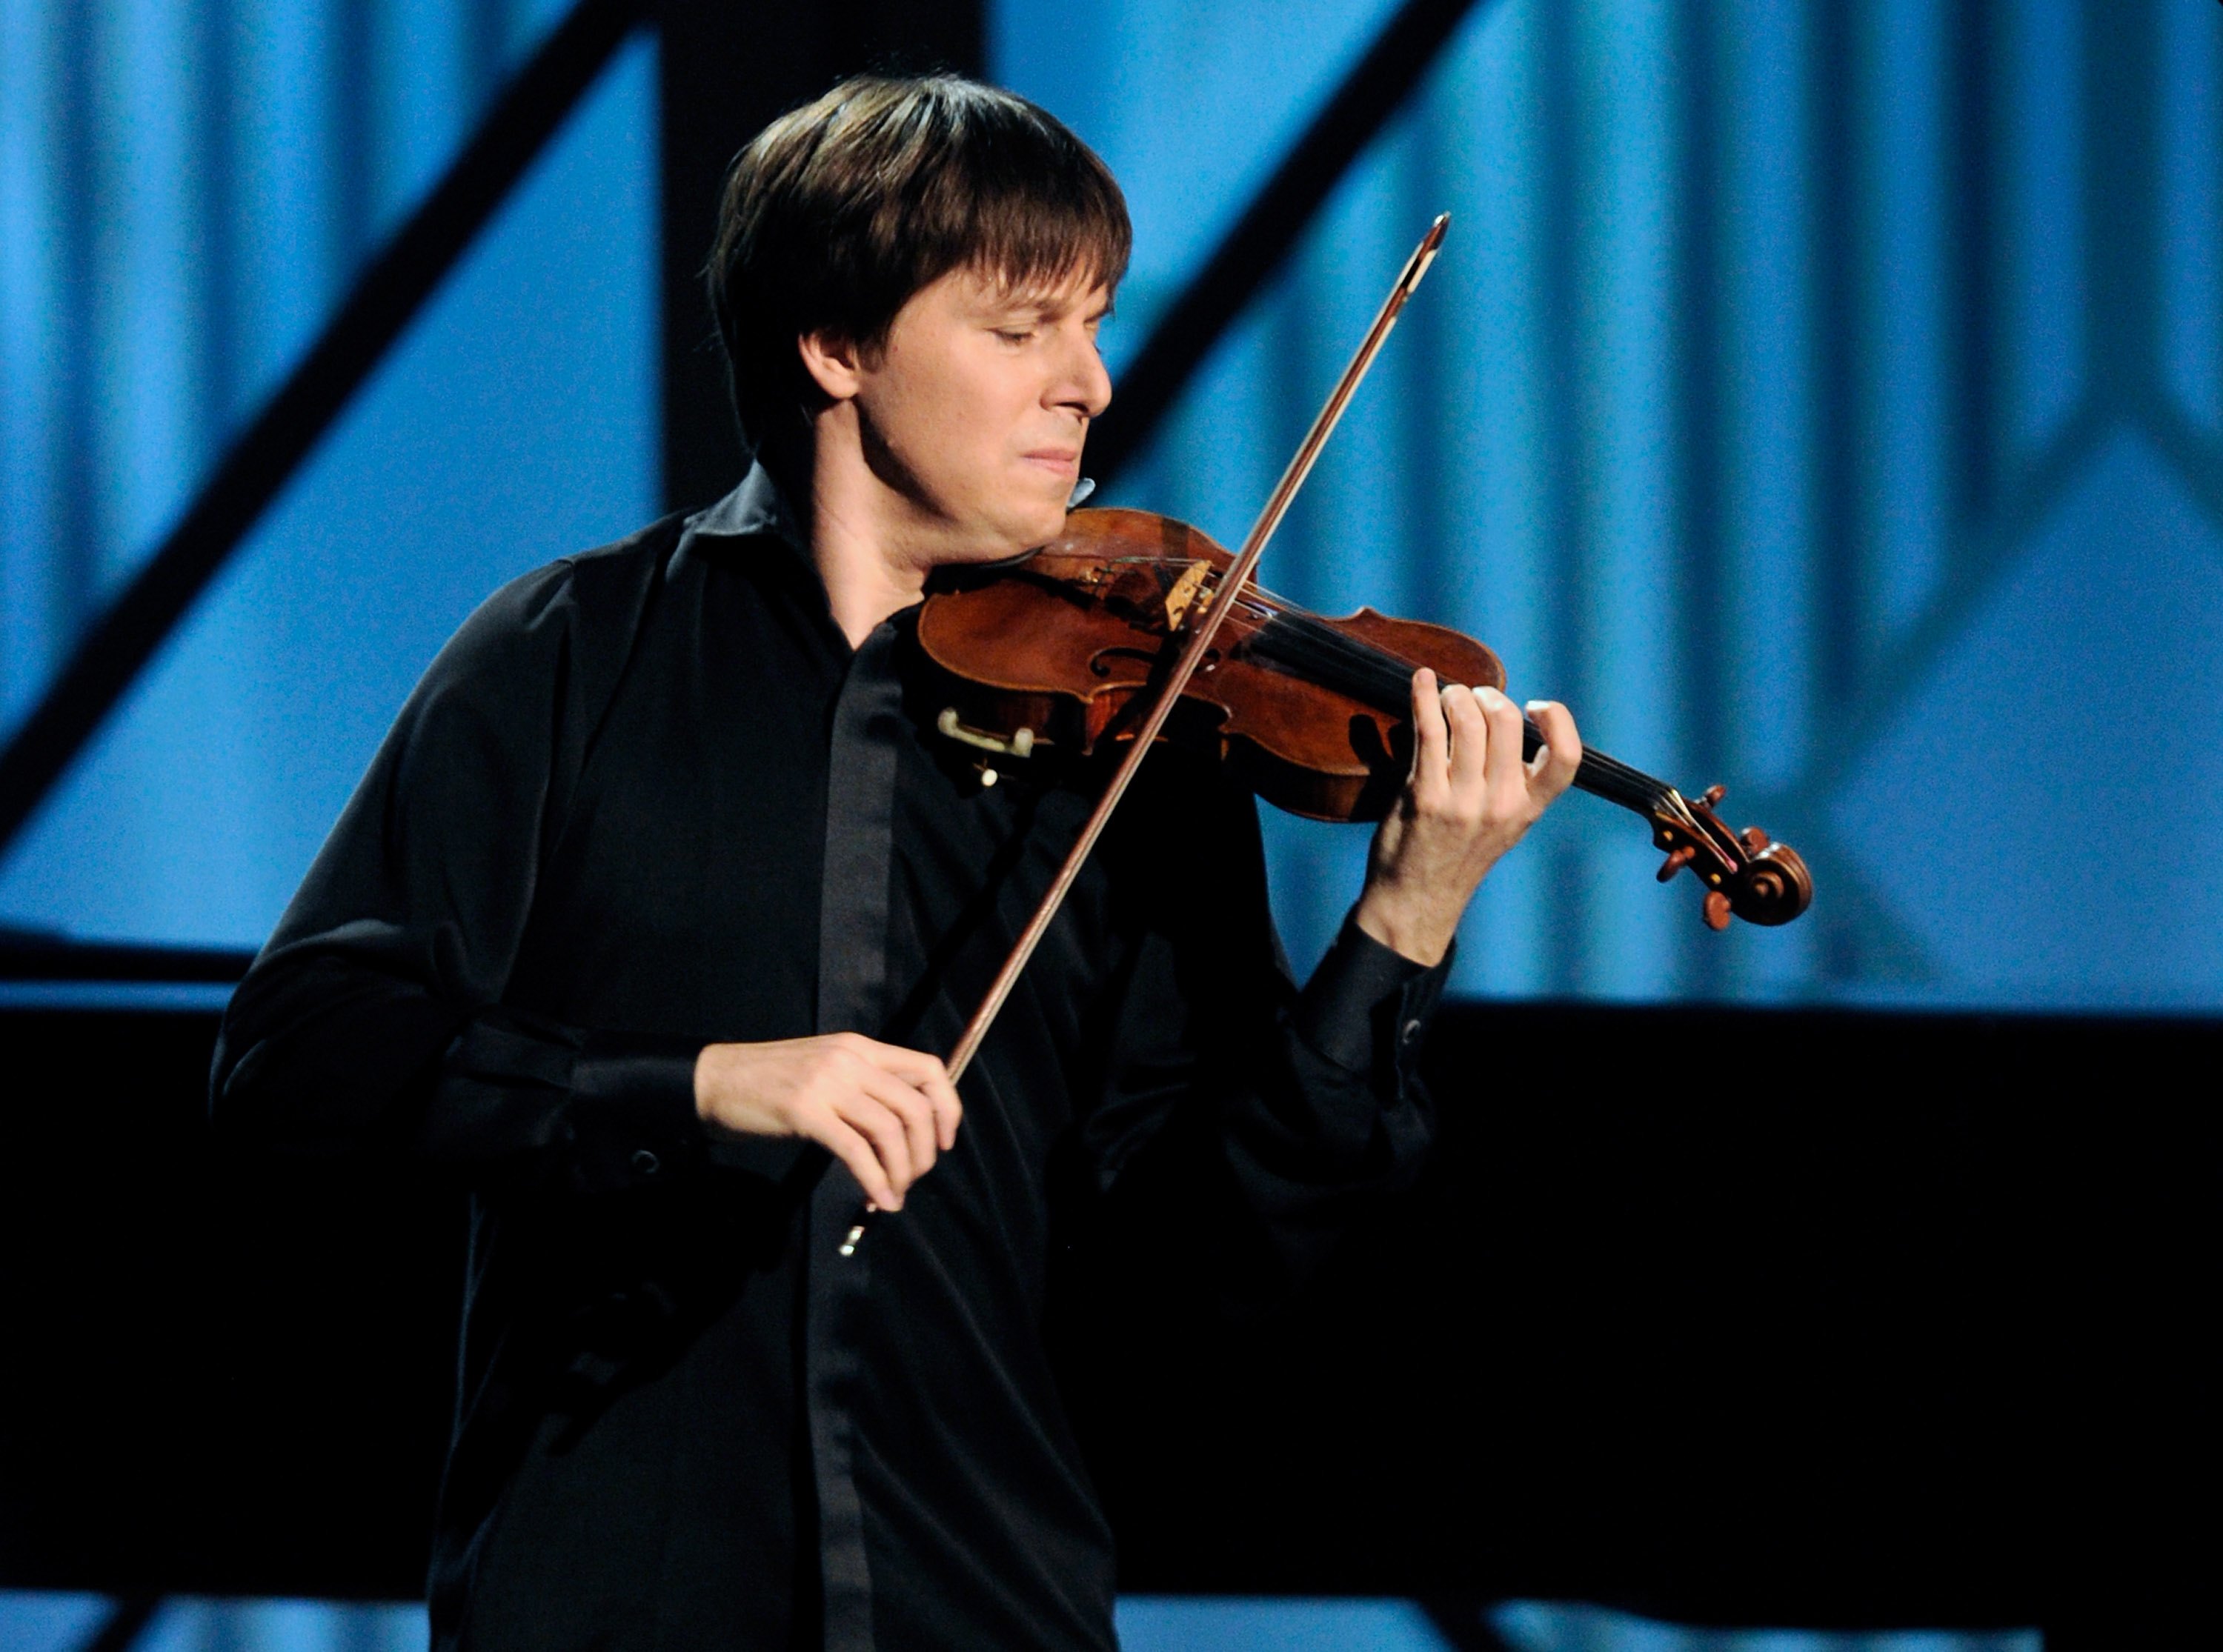 Joshua violin. Джошуа Белл. Ник Белл музыкант. Джошуа Белл в метро. Embertone - Joshua Bell Violin.